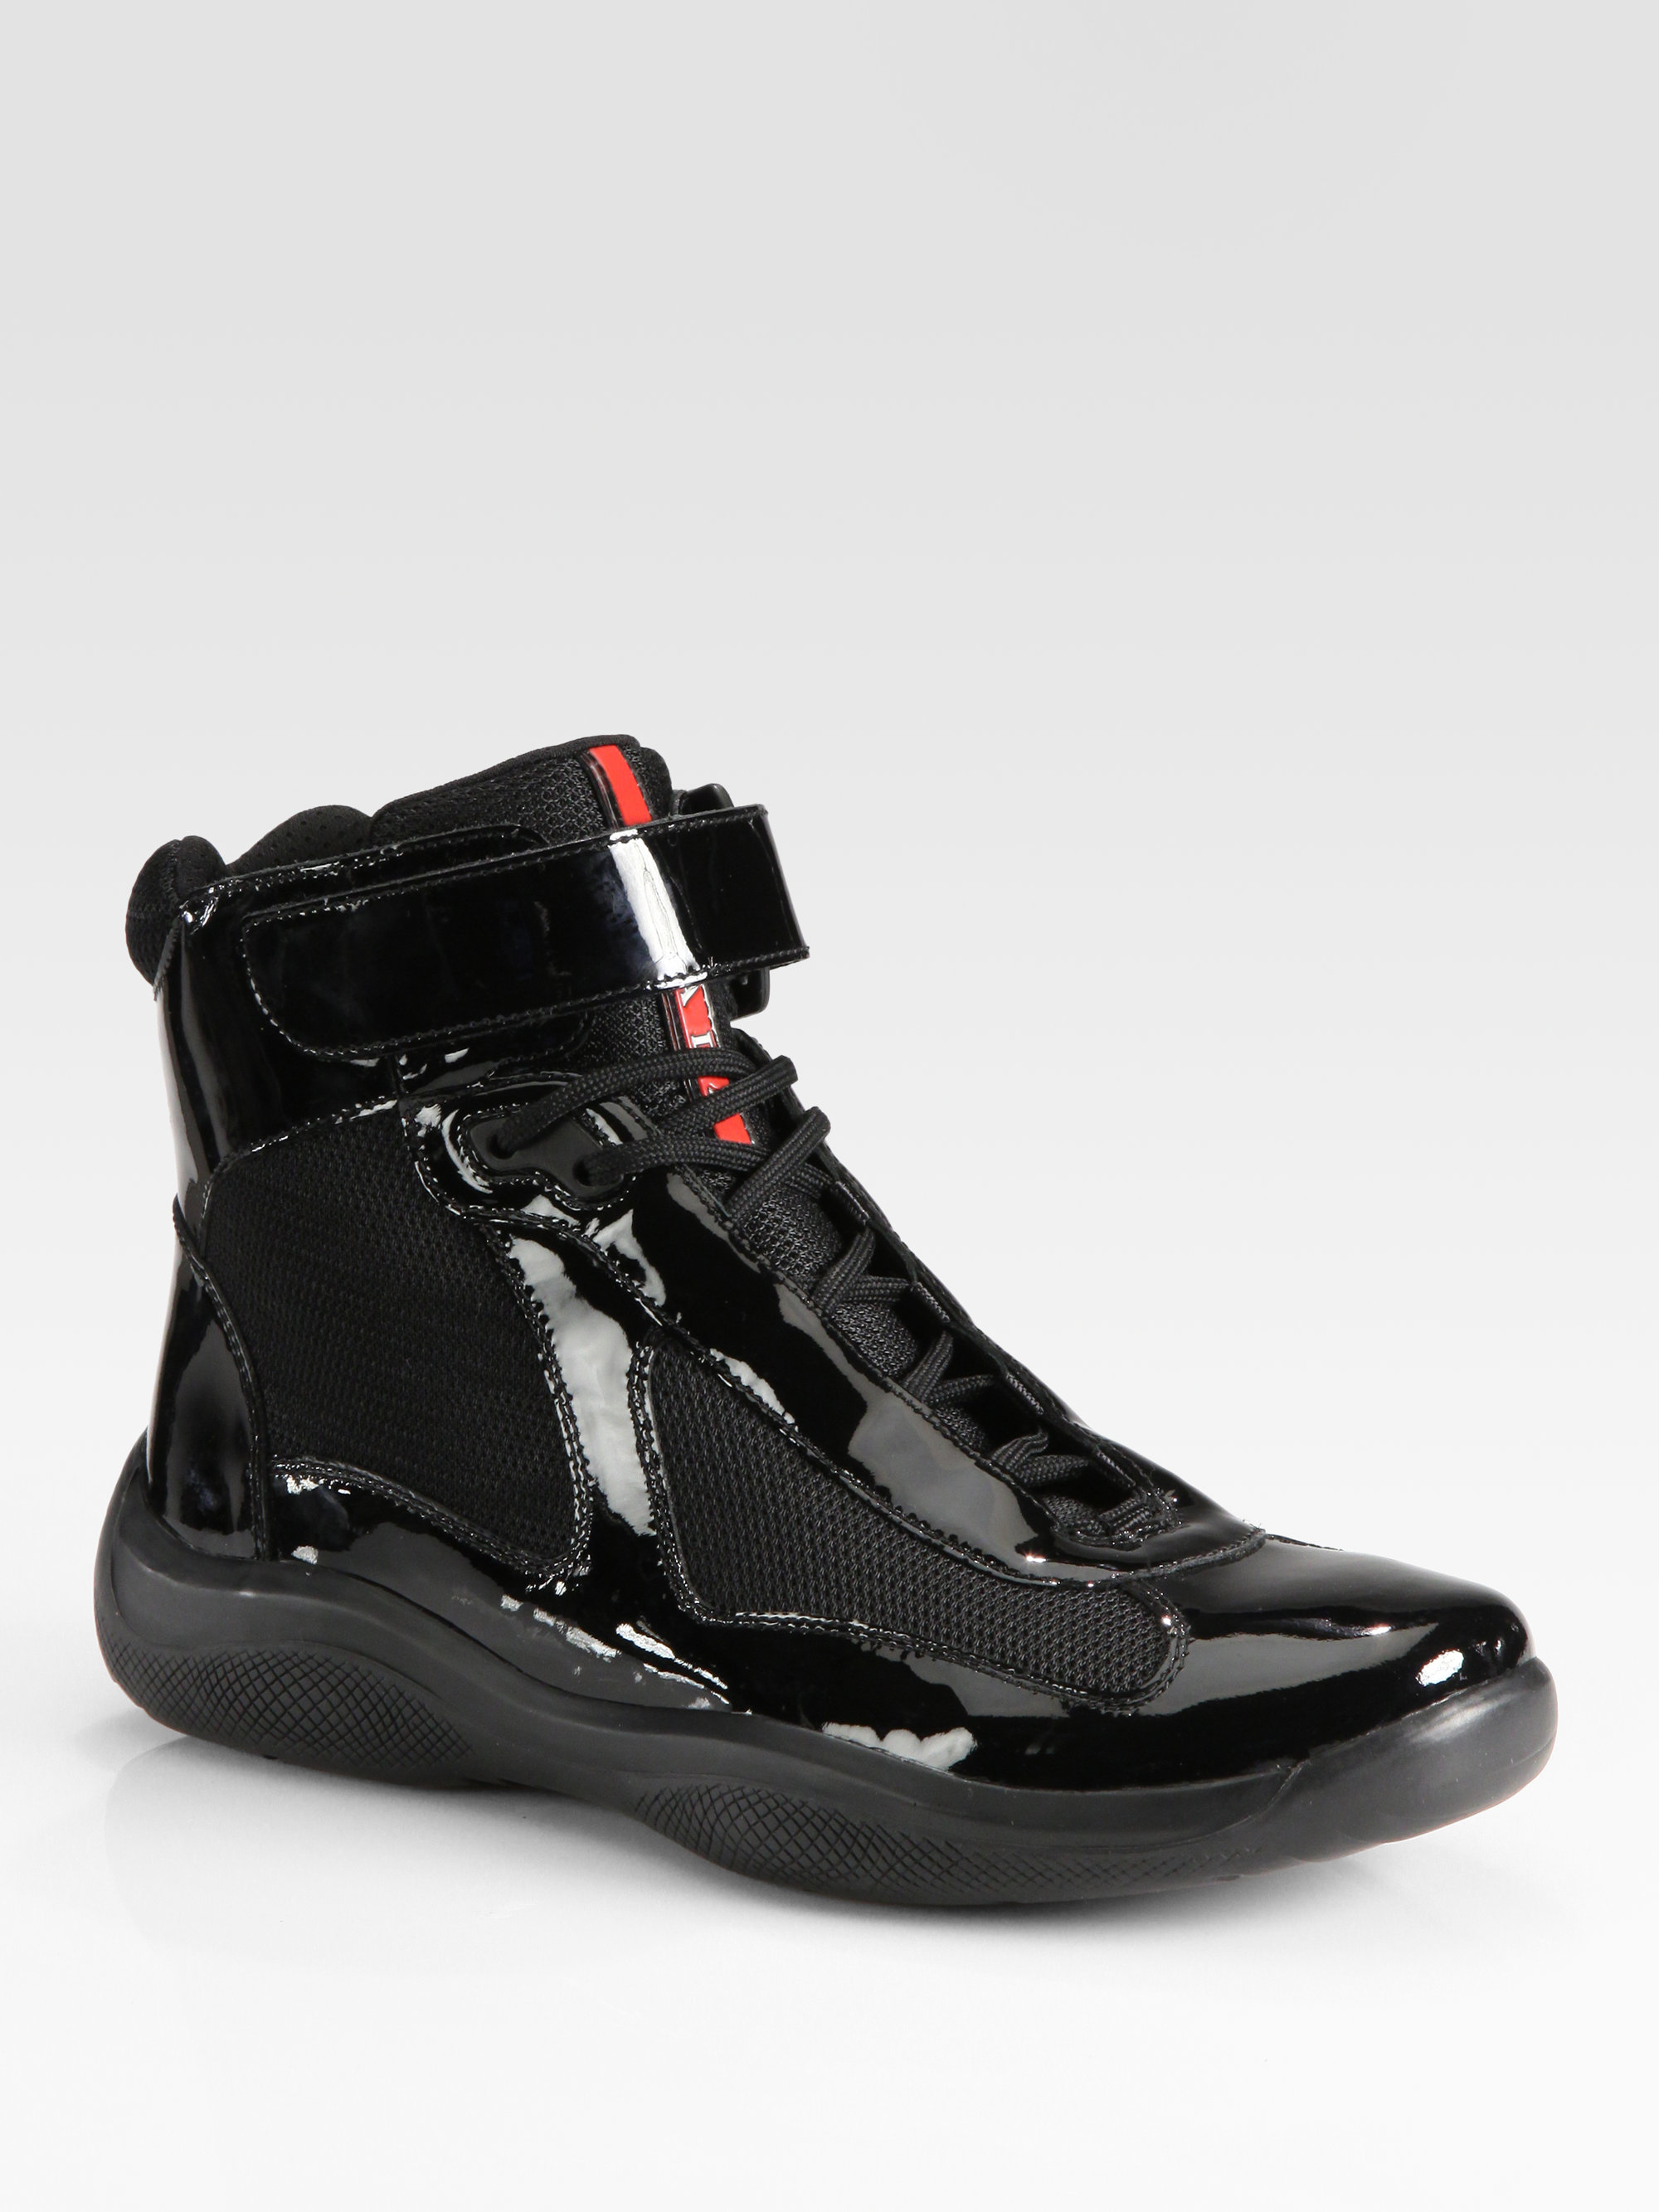 Prada Hightop Patent Sneakers in Dark Red (Red) - Lyst